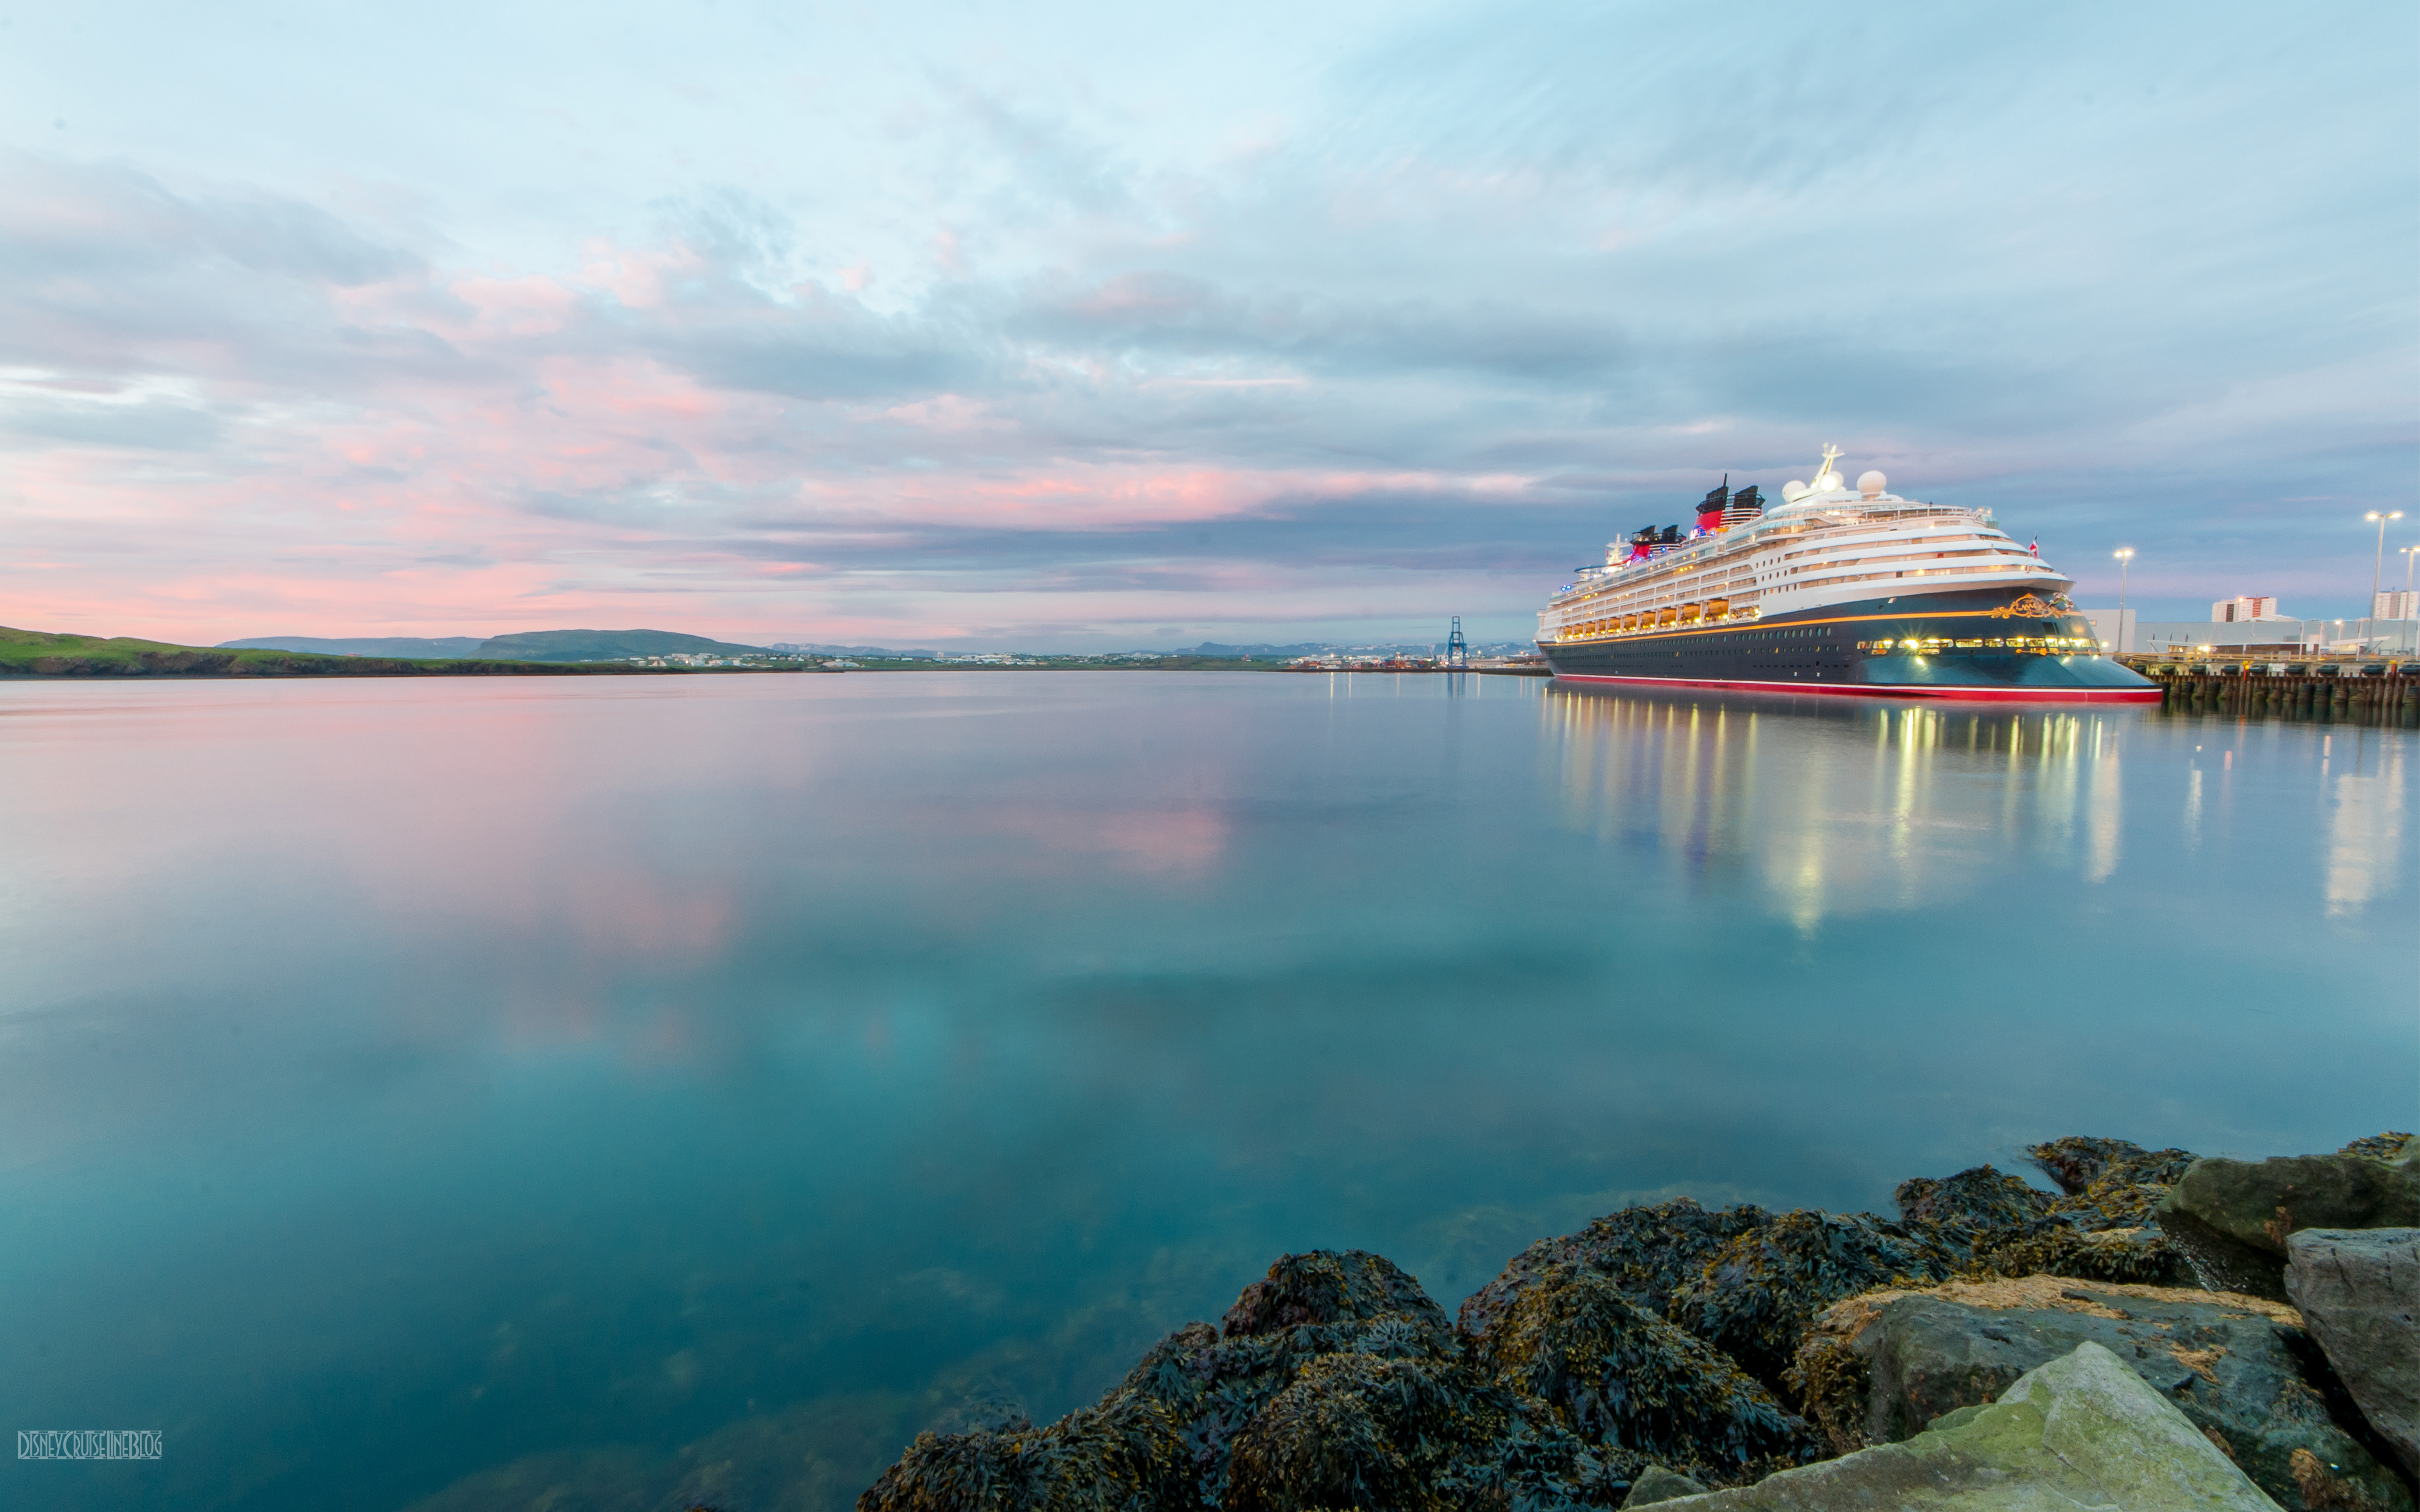 August 22 Disney Magic In Reykjavik Iceland Desktop Wallpaper The Disney Cruise Line Blog